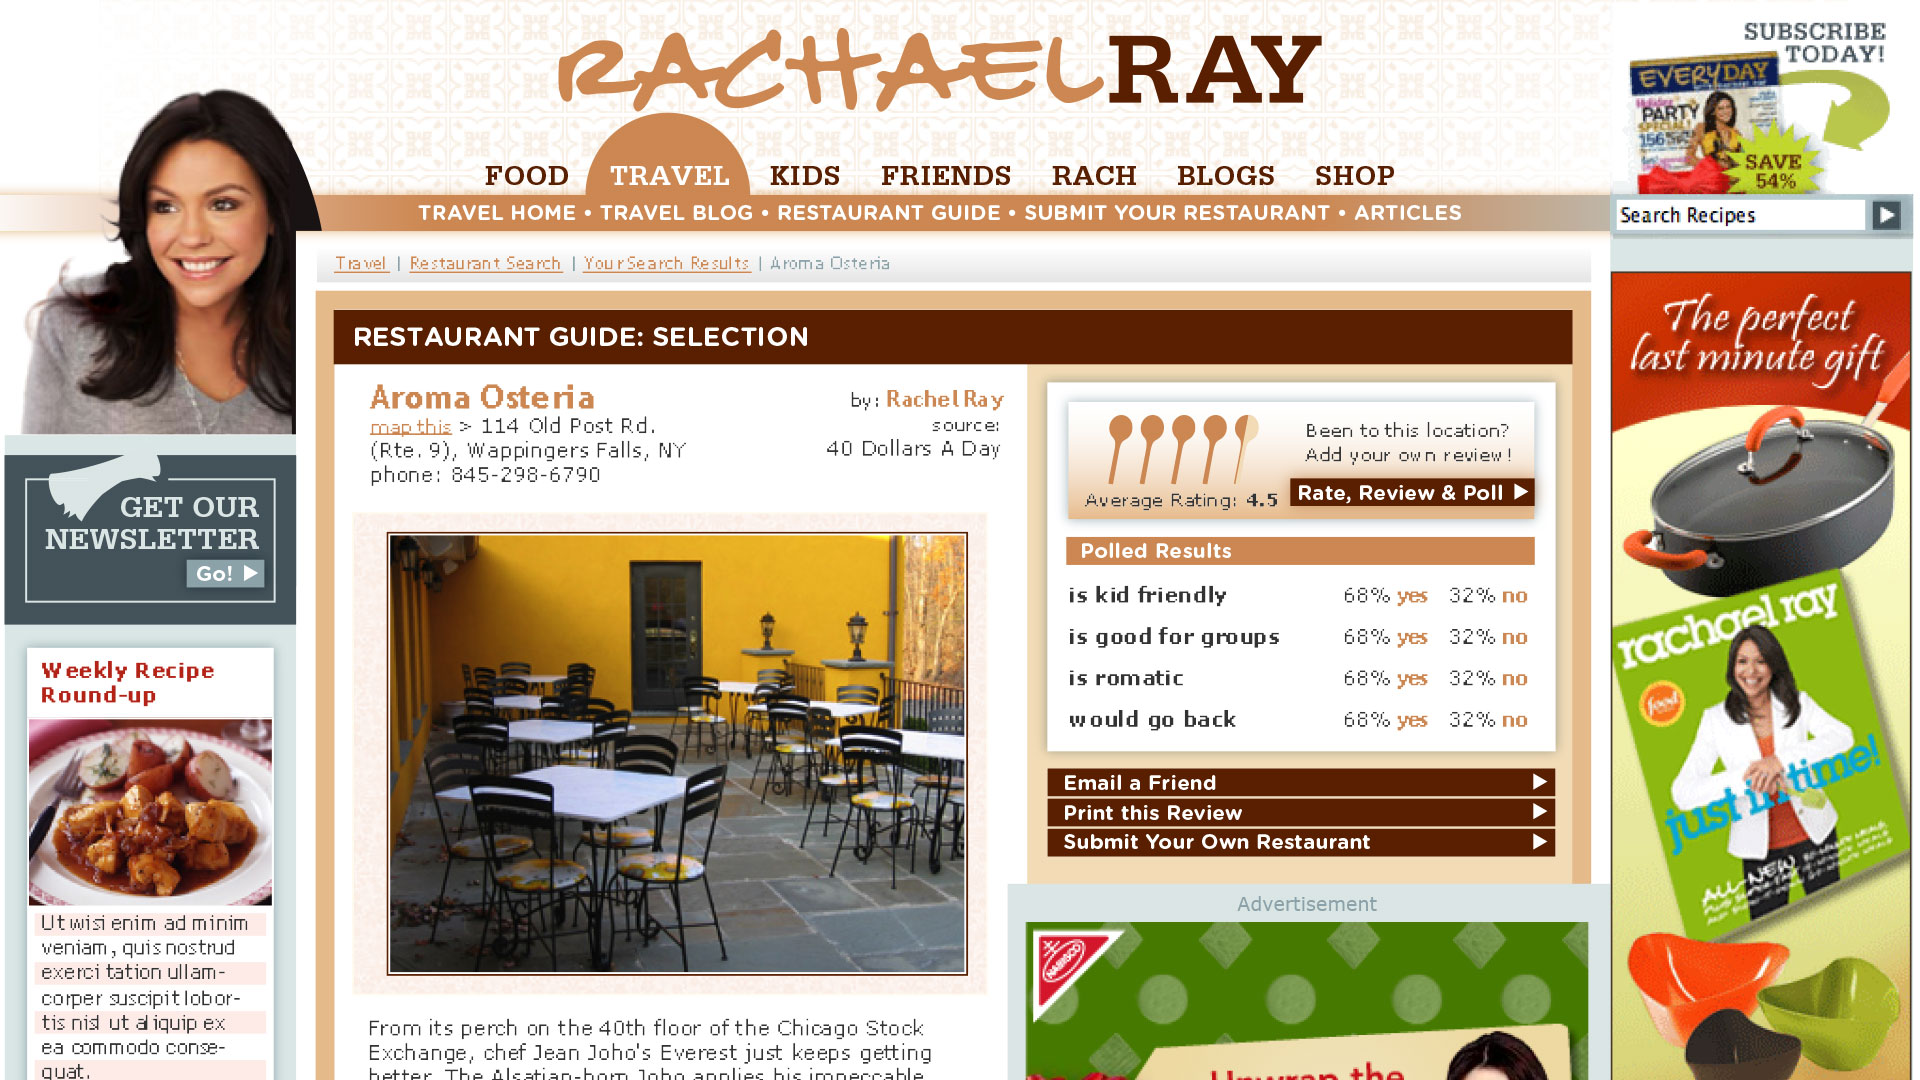 Rachael Ray 2.0 :: The Chopping Block, Inc